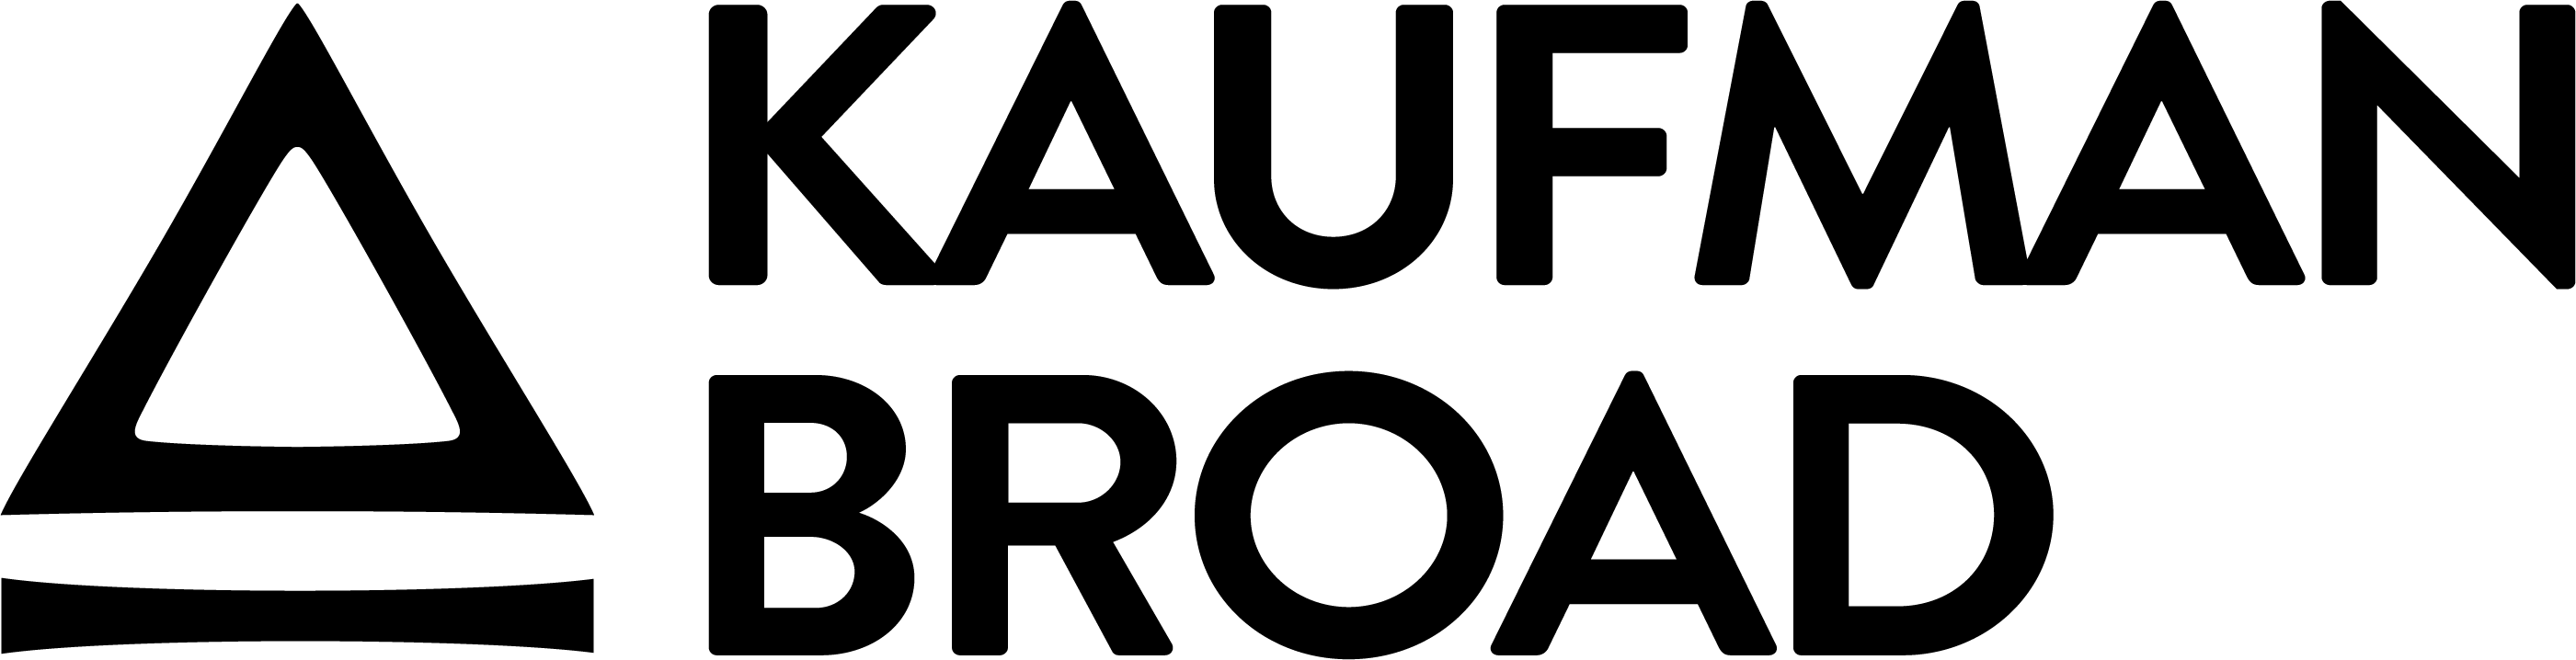 Le logo de KAUFMAN & BROAD